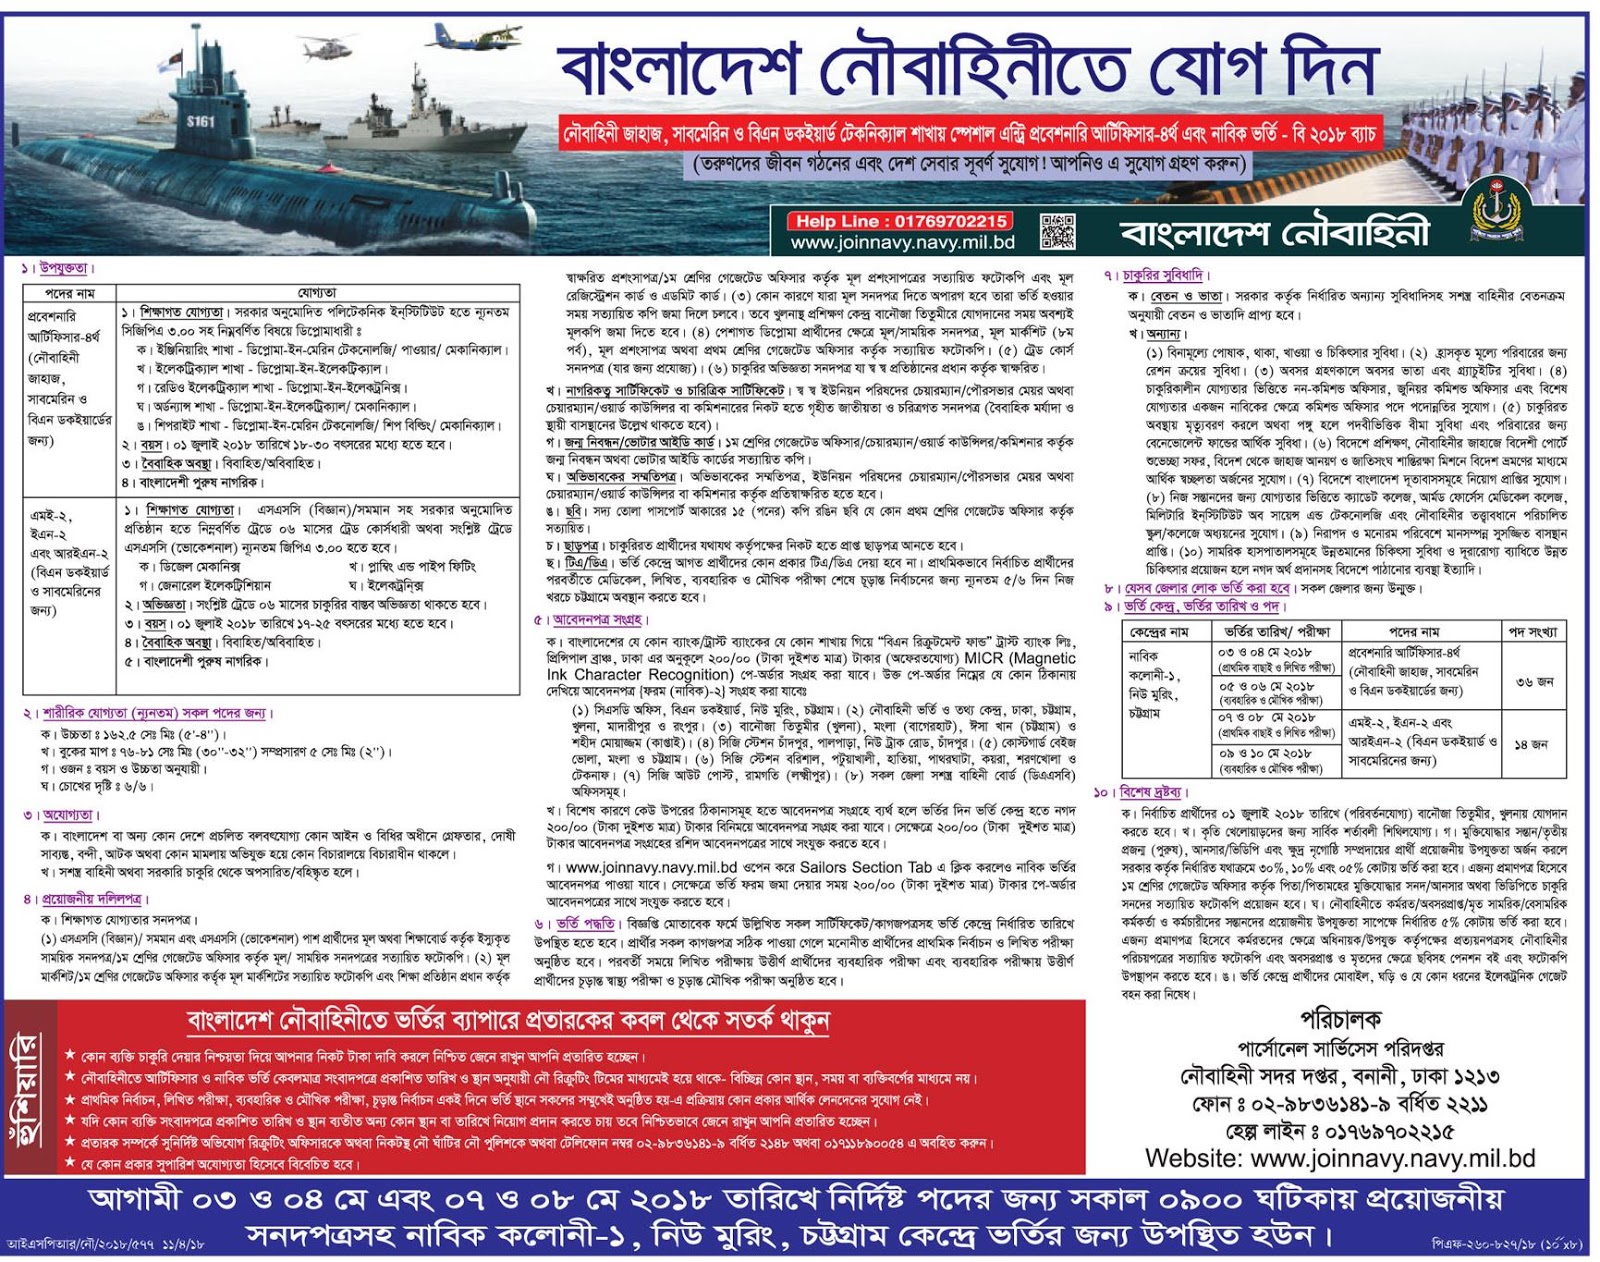 Bangladesh Navy Sailor and Special Entry Probationary Artificer Recruitment Circular 2018